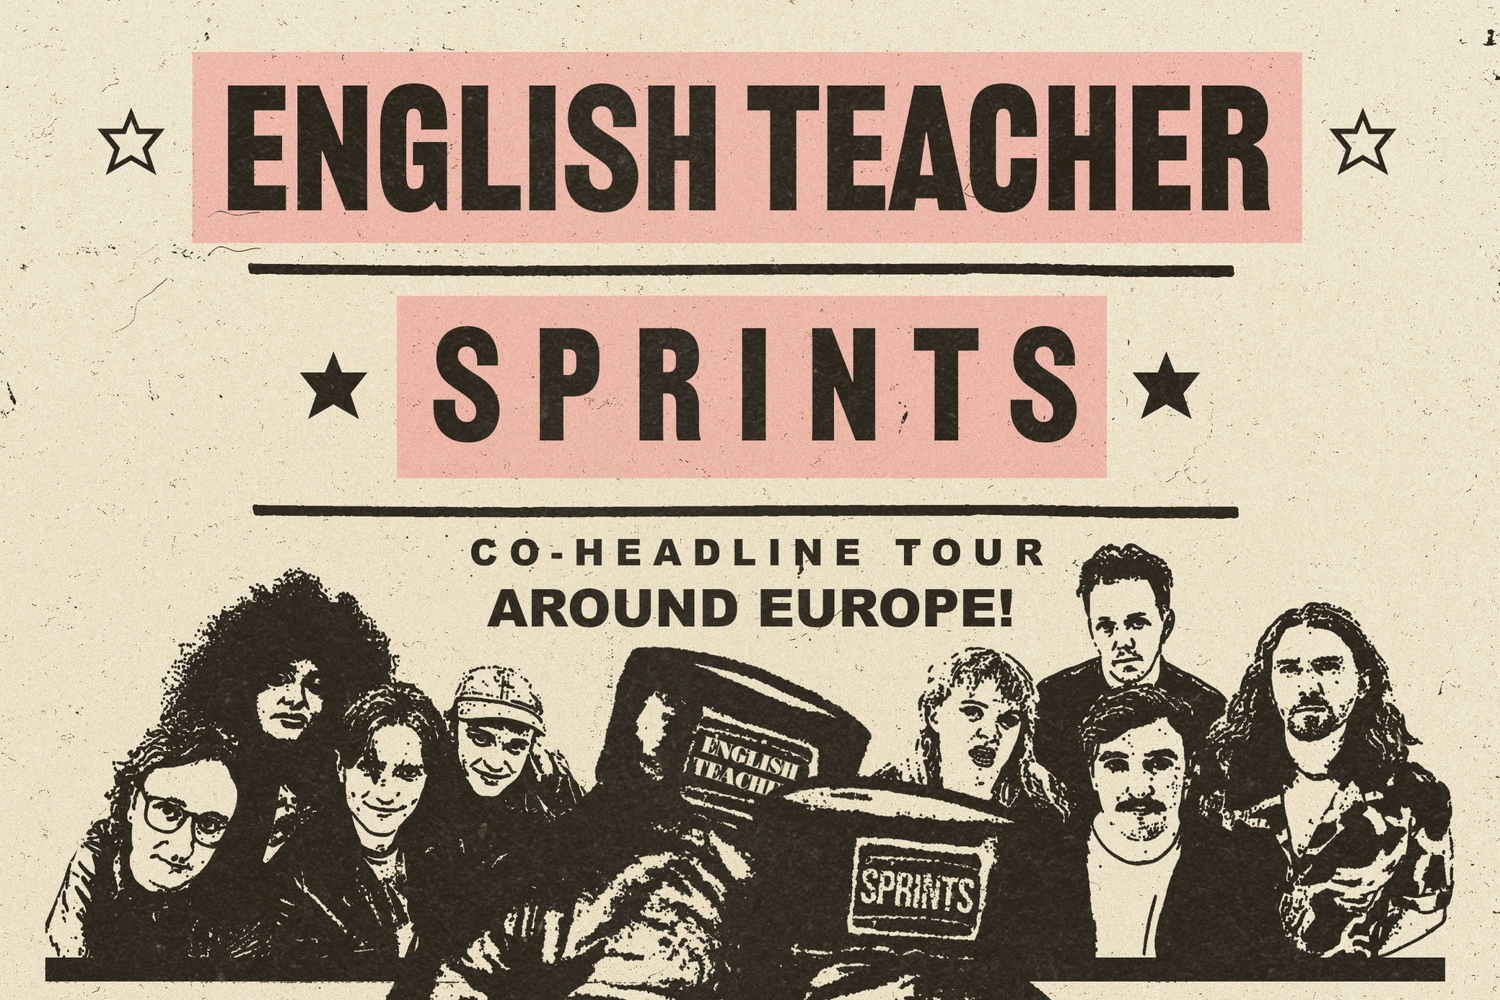 English Teacher & Sprints team up for European co-headline tour